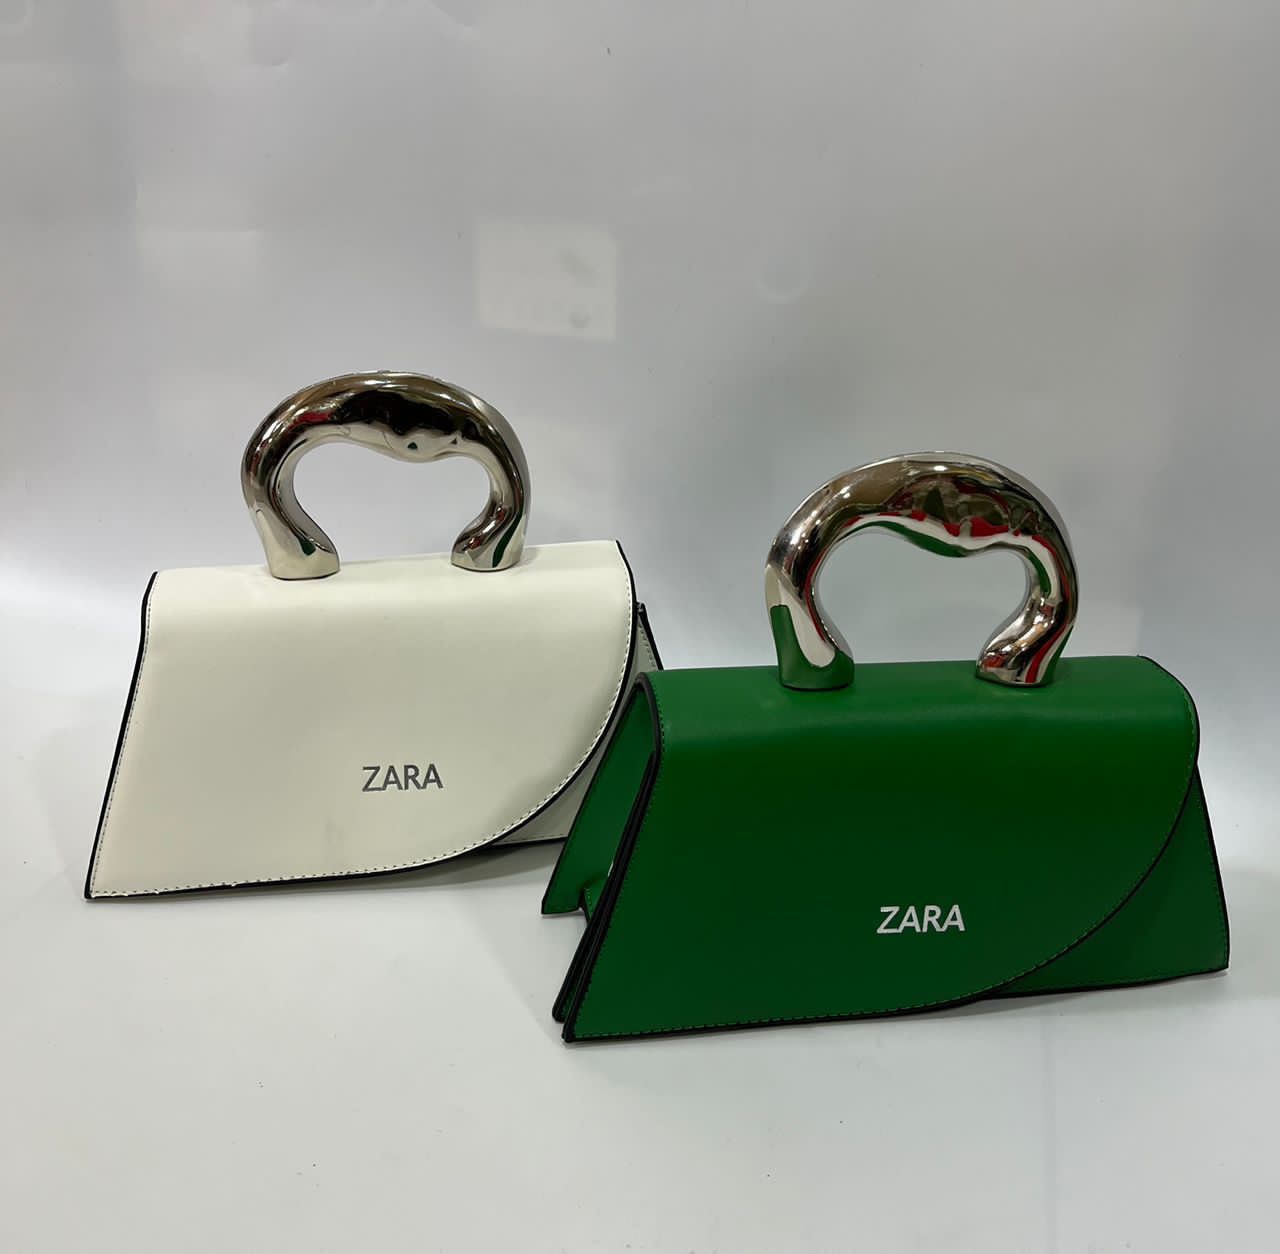 Wholesale ladies camera purses mini bags| Alibaba.com